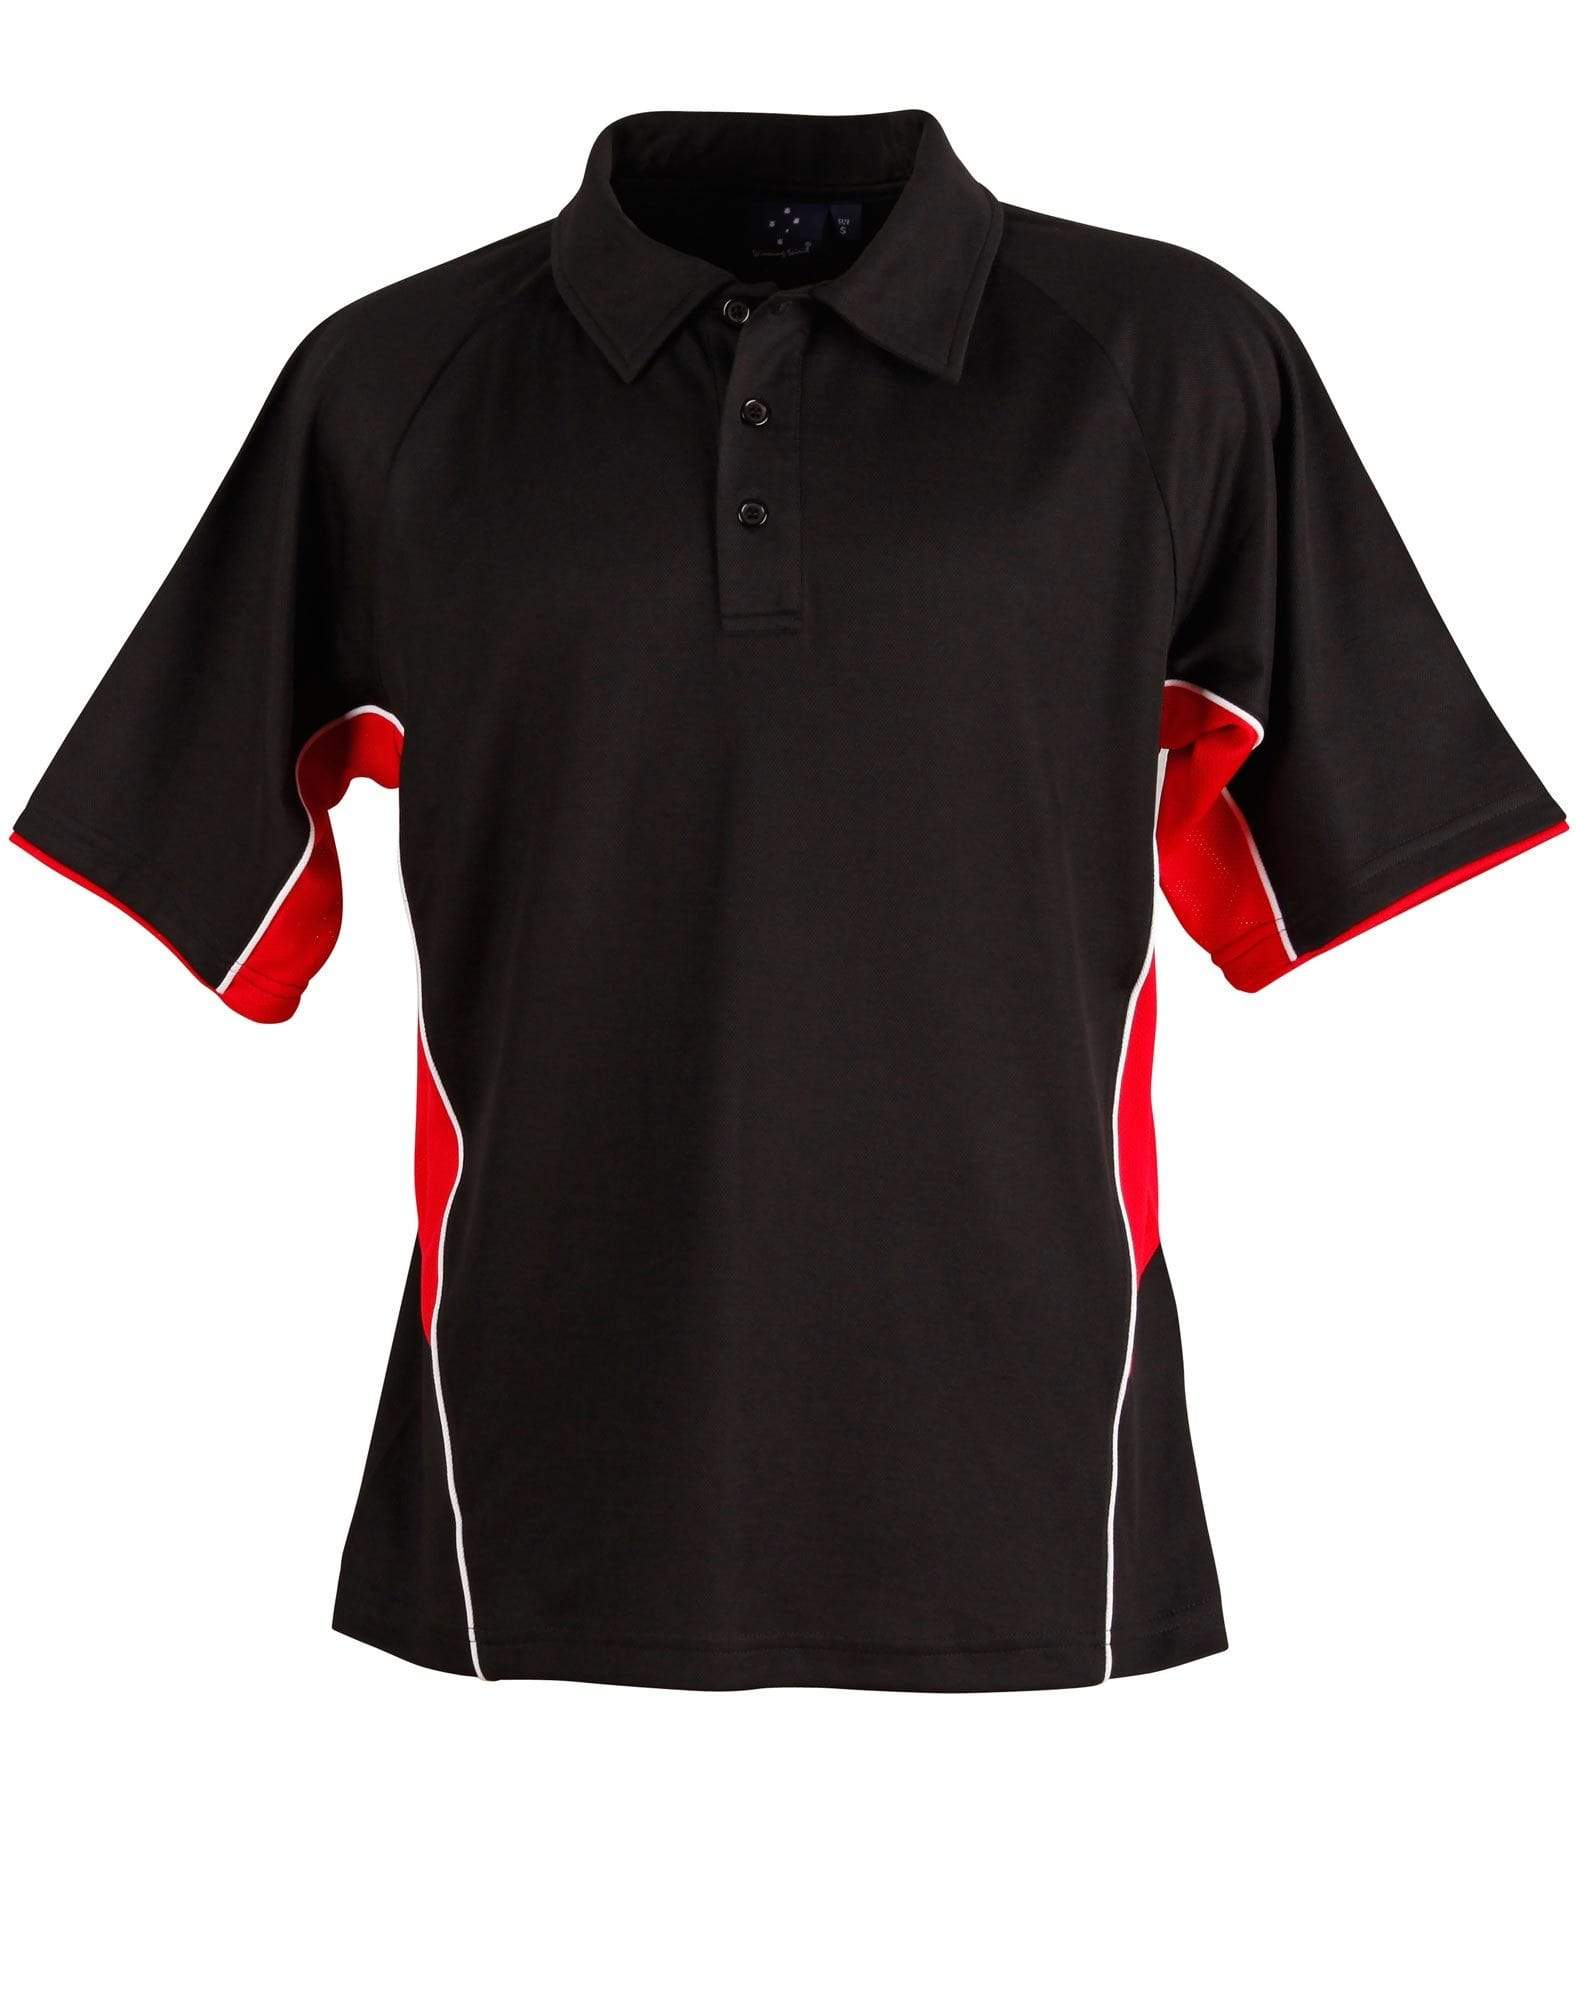 STATESMAN POLO Men's PS68 Casual Wear Winning Spirit Black/White/Red S 